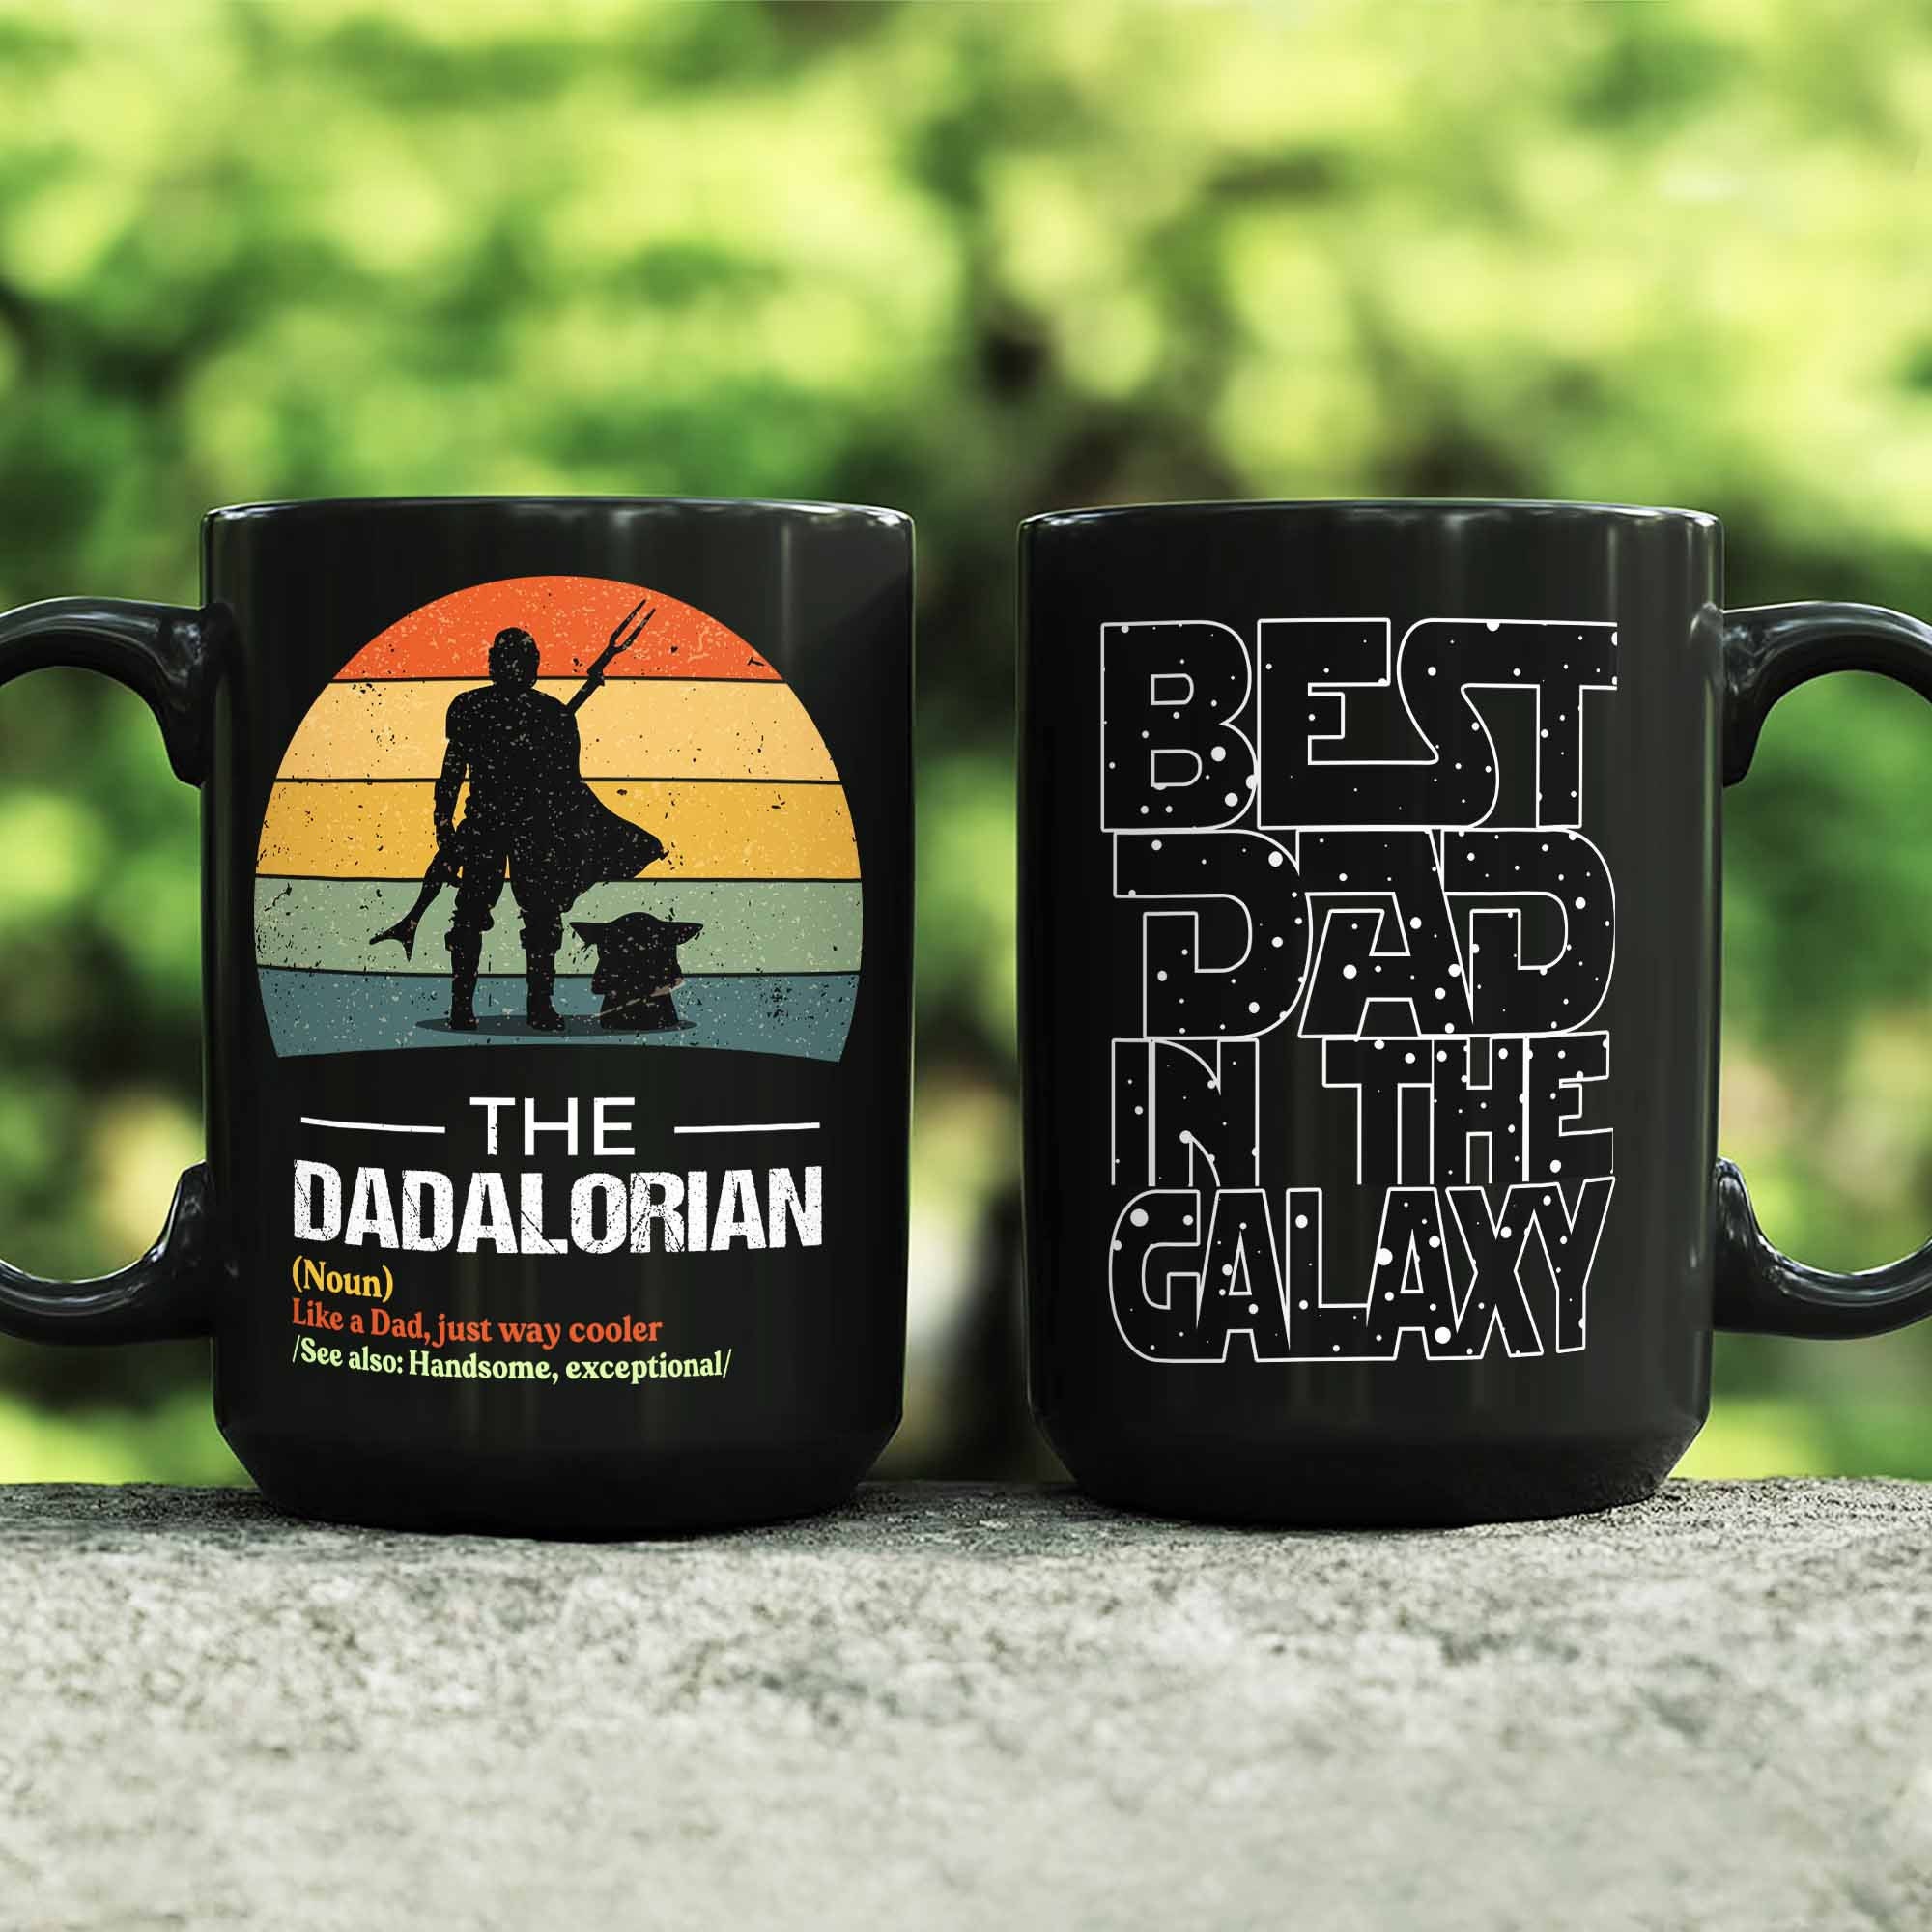 Star Wars 'The Mandalorian' Enamel Big Coffee Mug Cup – Pit-a-Pats.com